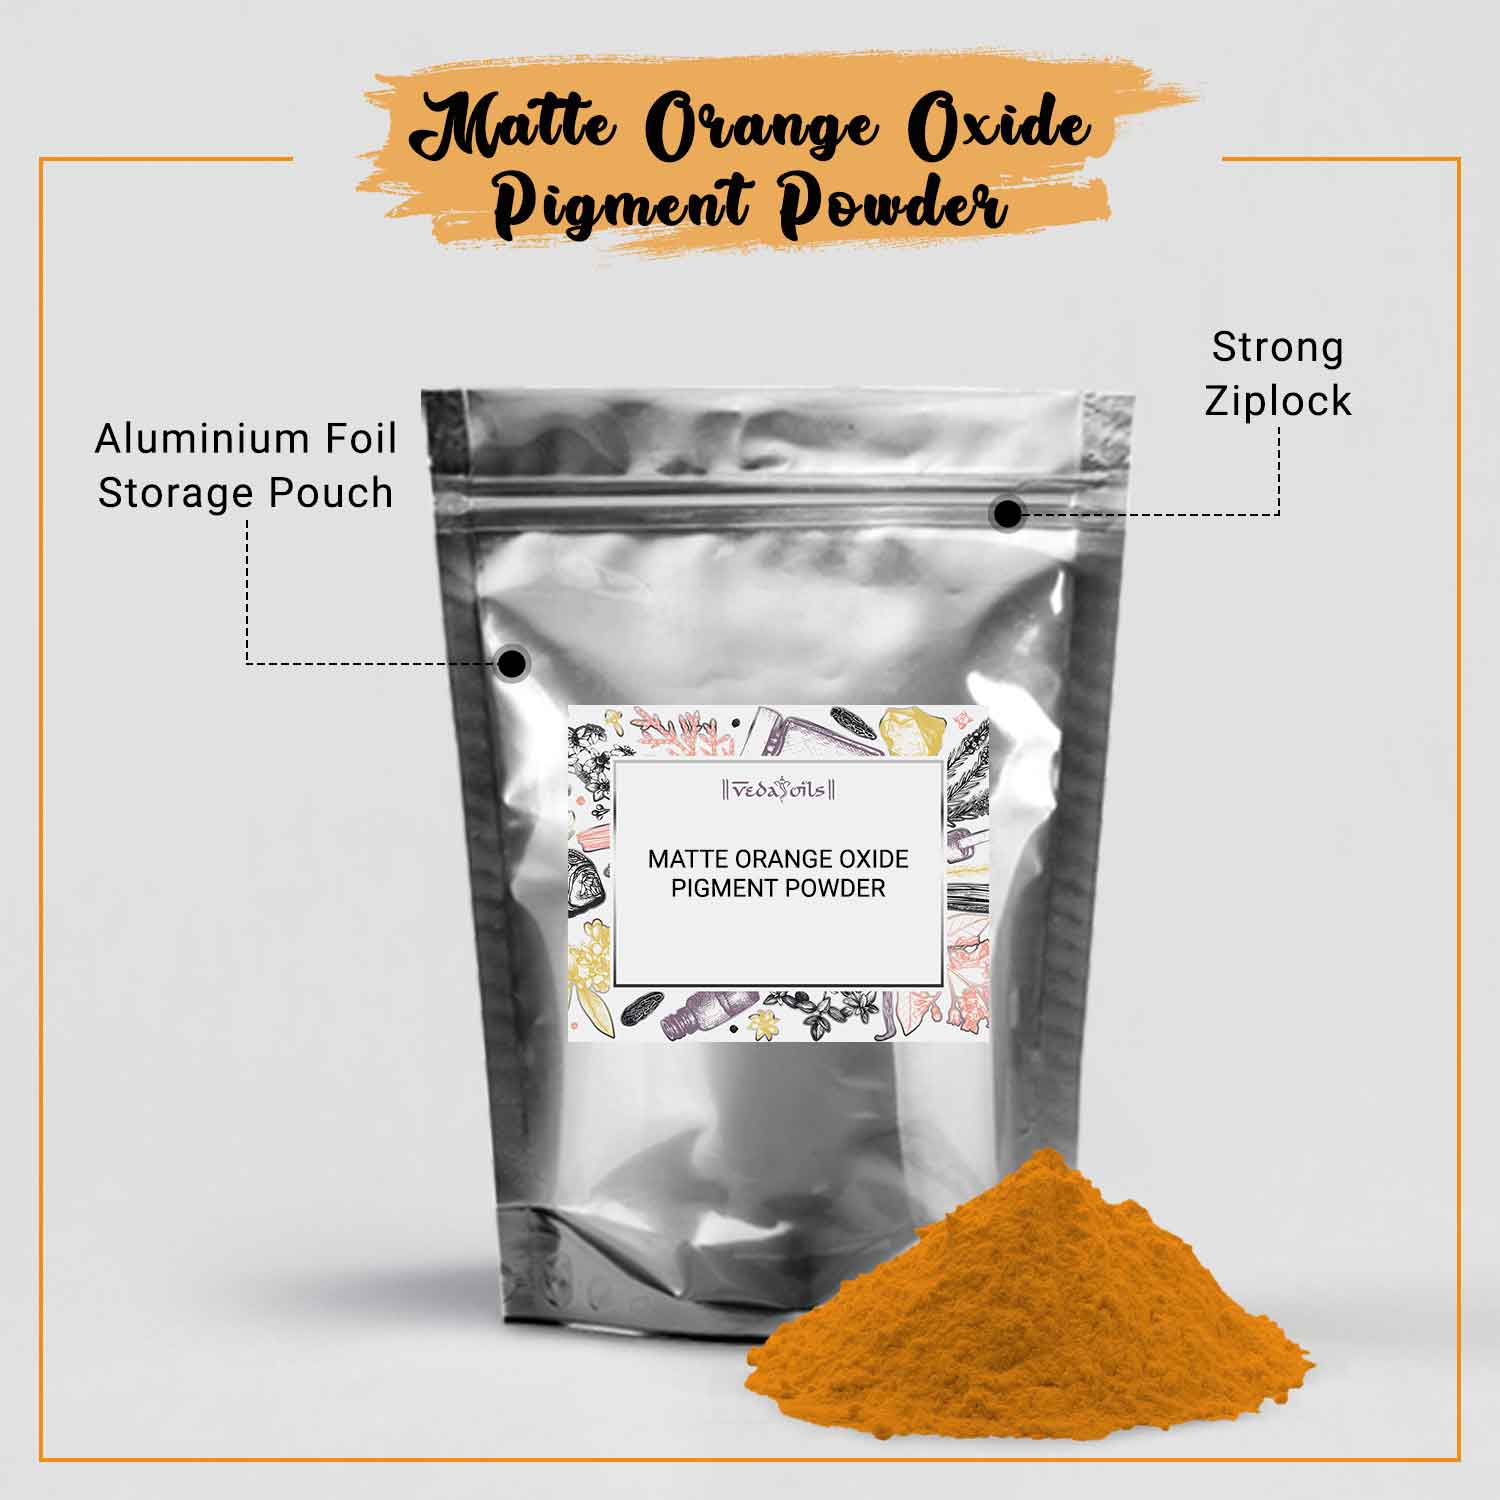 Matte Orange Oxide Pigment Powder Packing